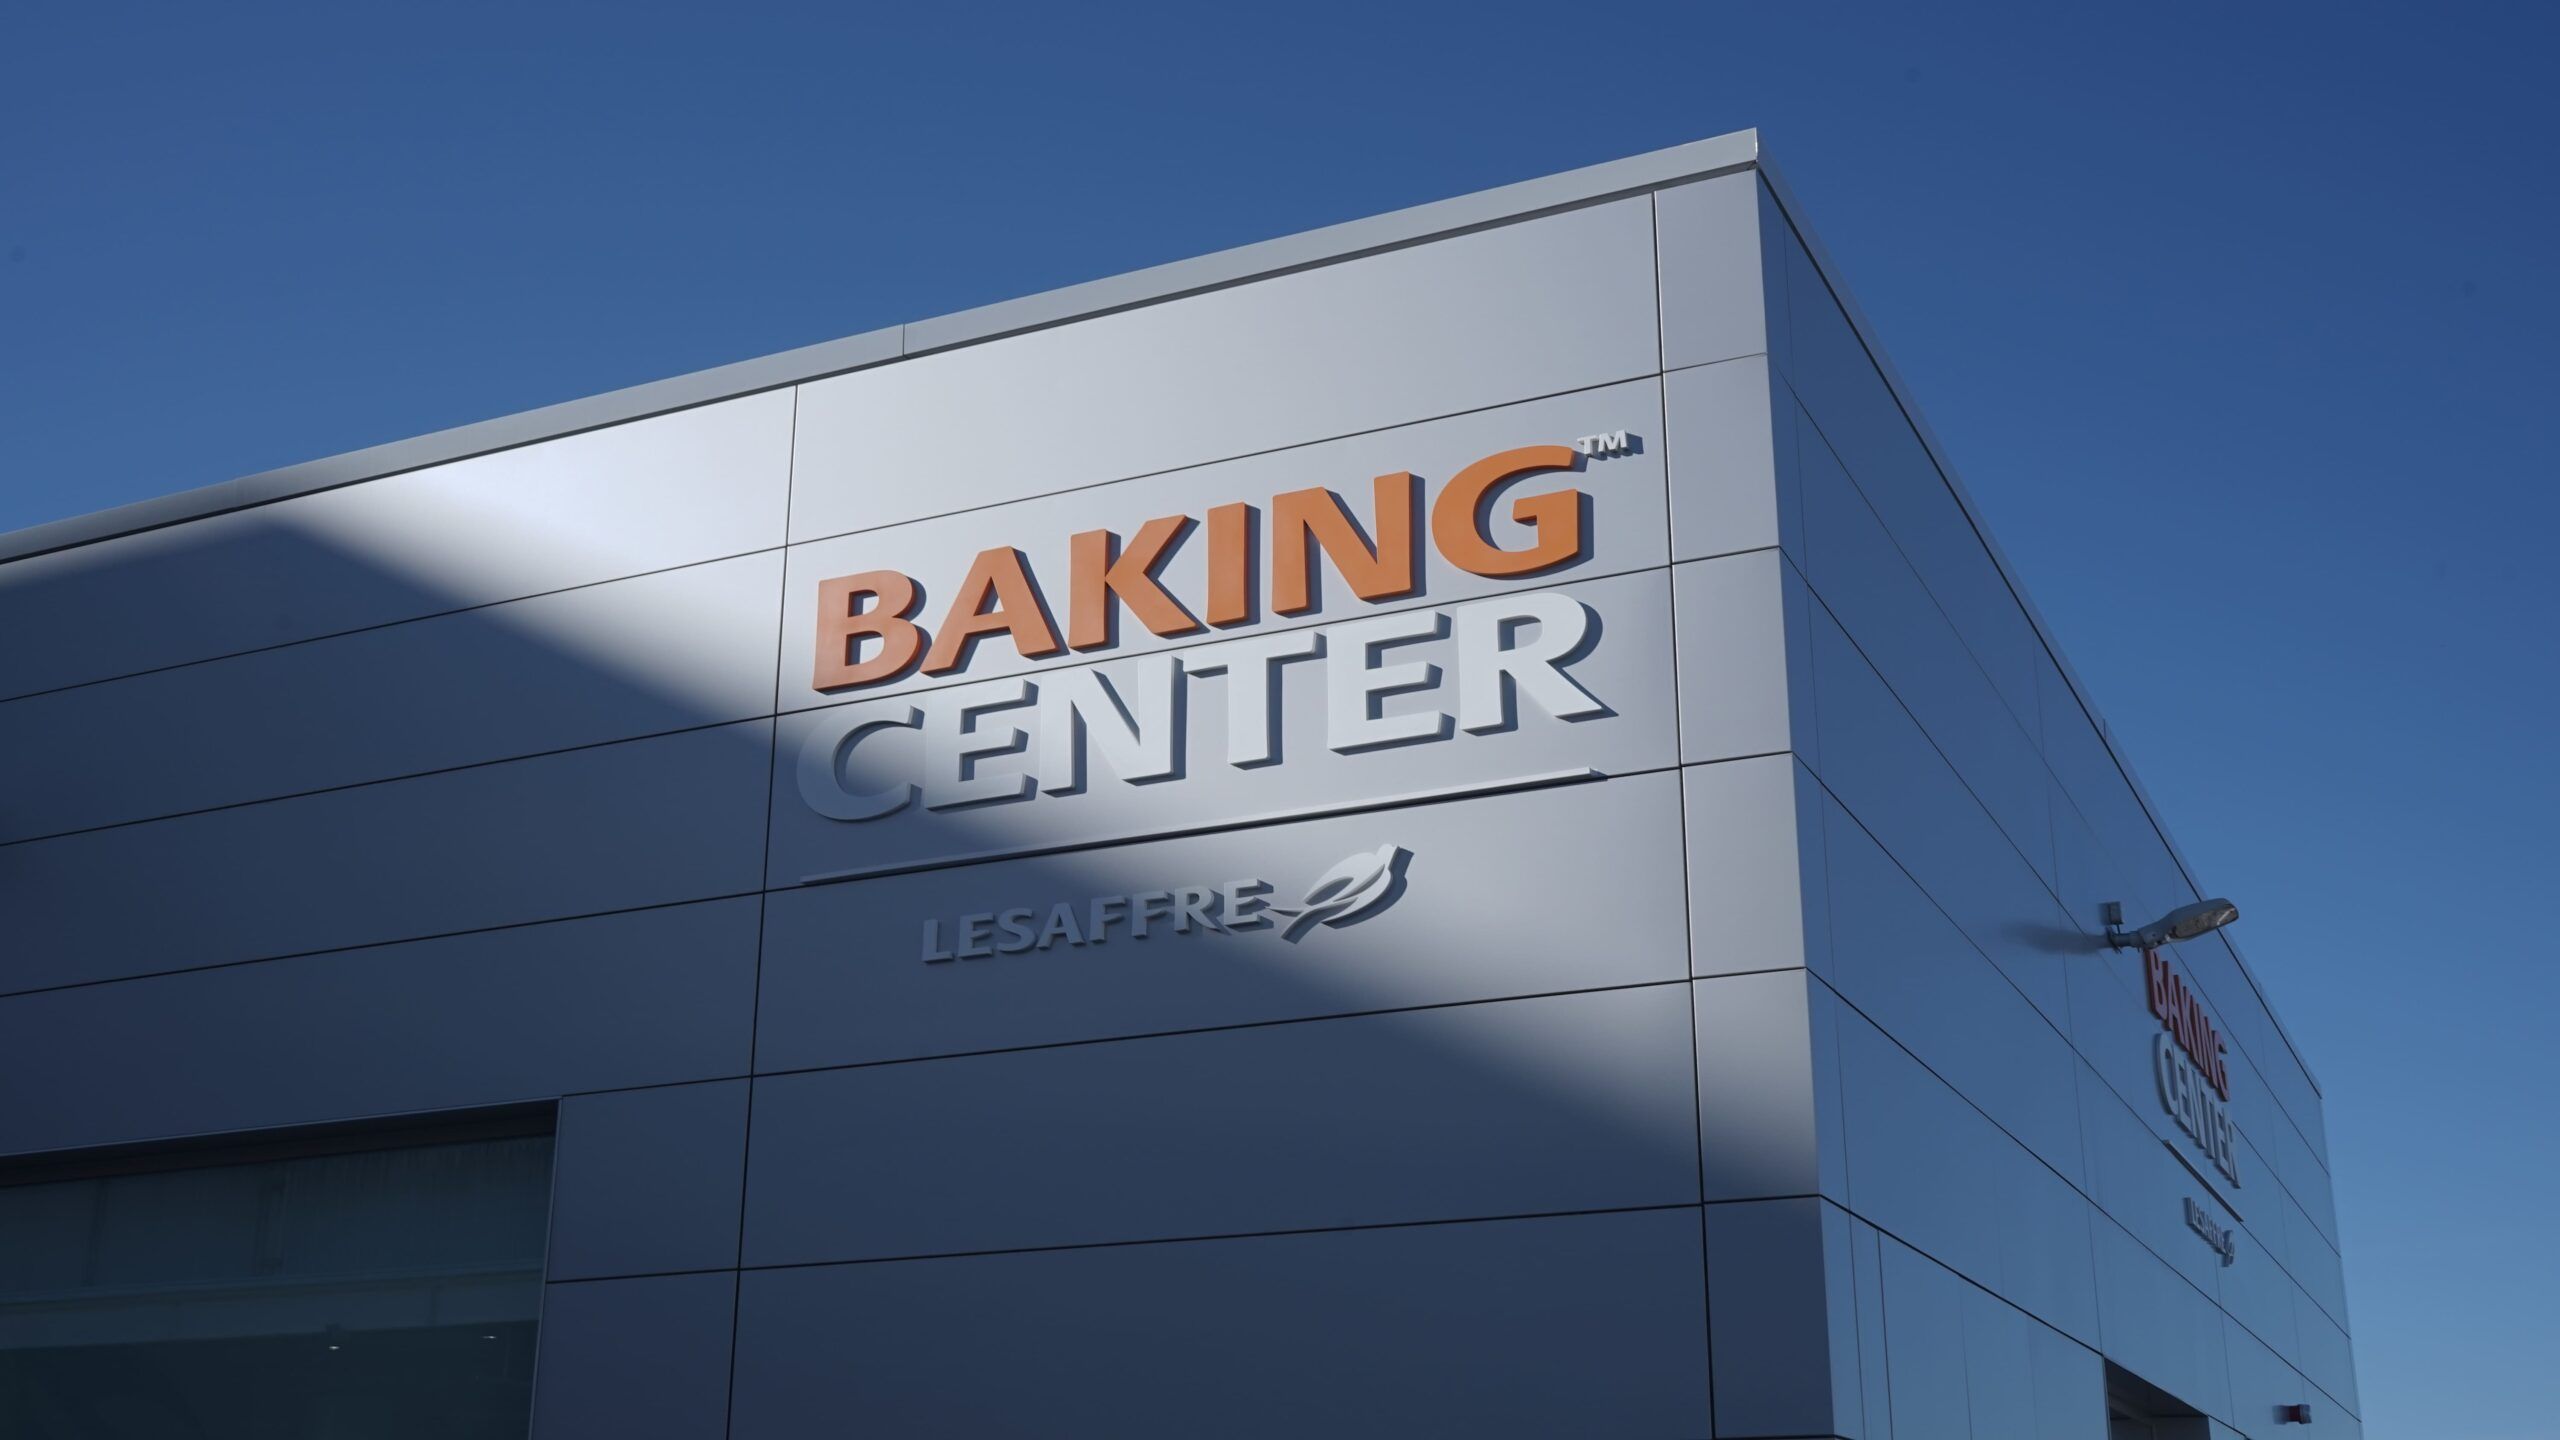 Baking CenterTM